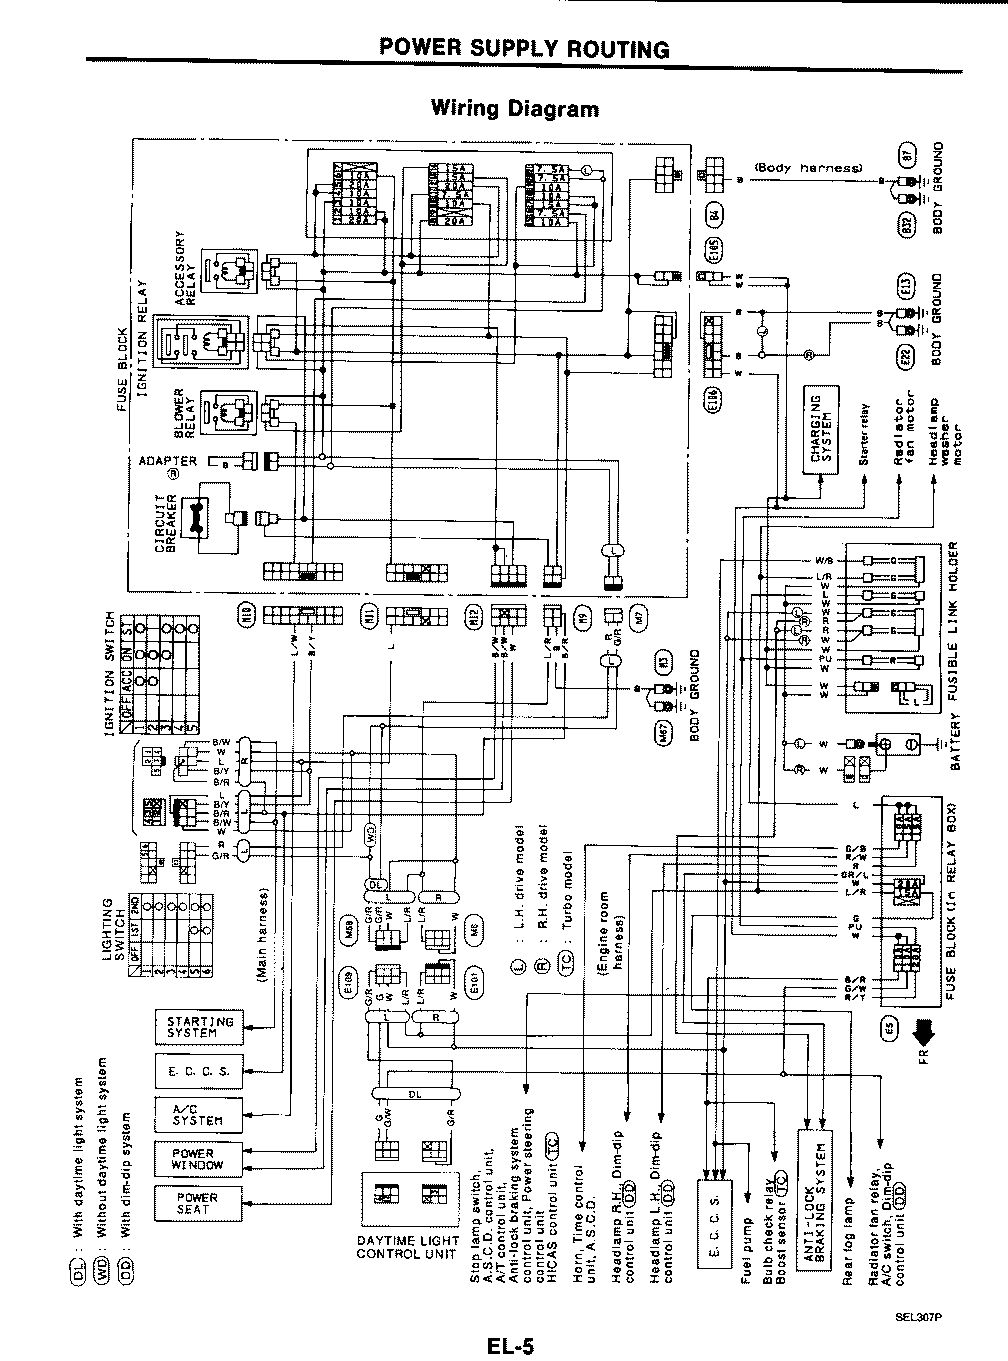 nissan wiring diagram by rickfihoutab1974 on DeviantArt